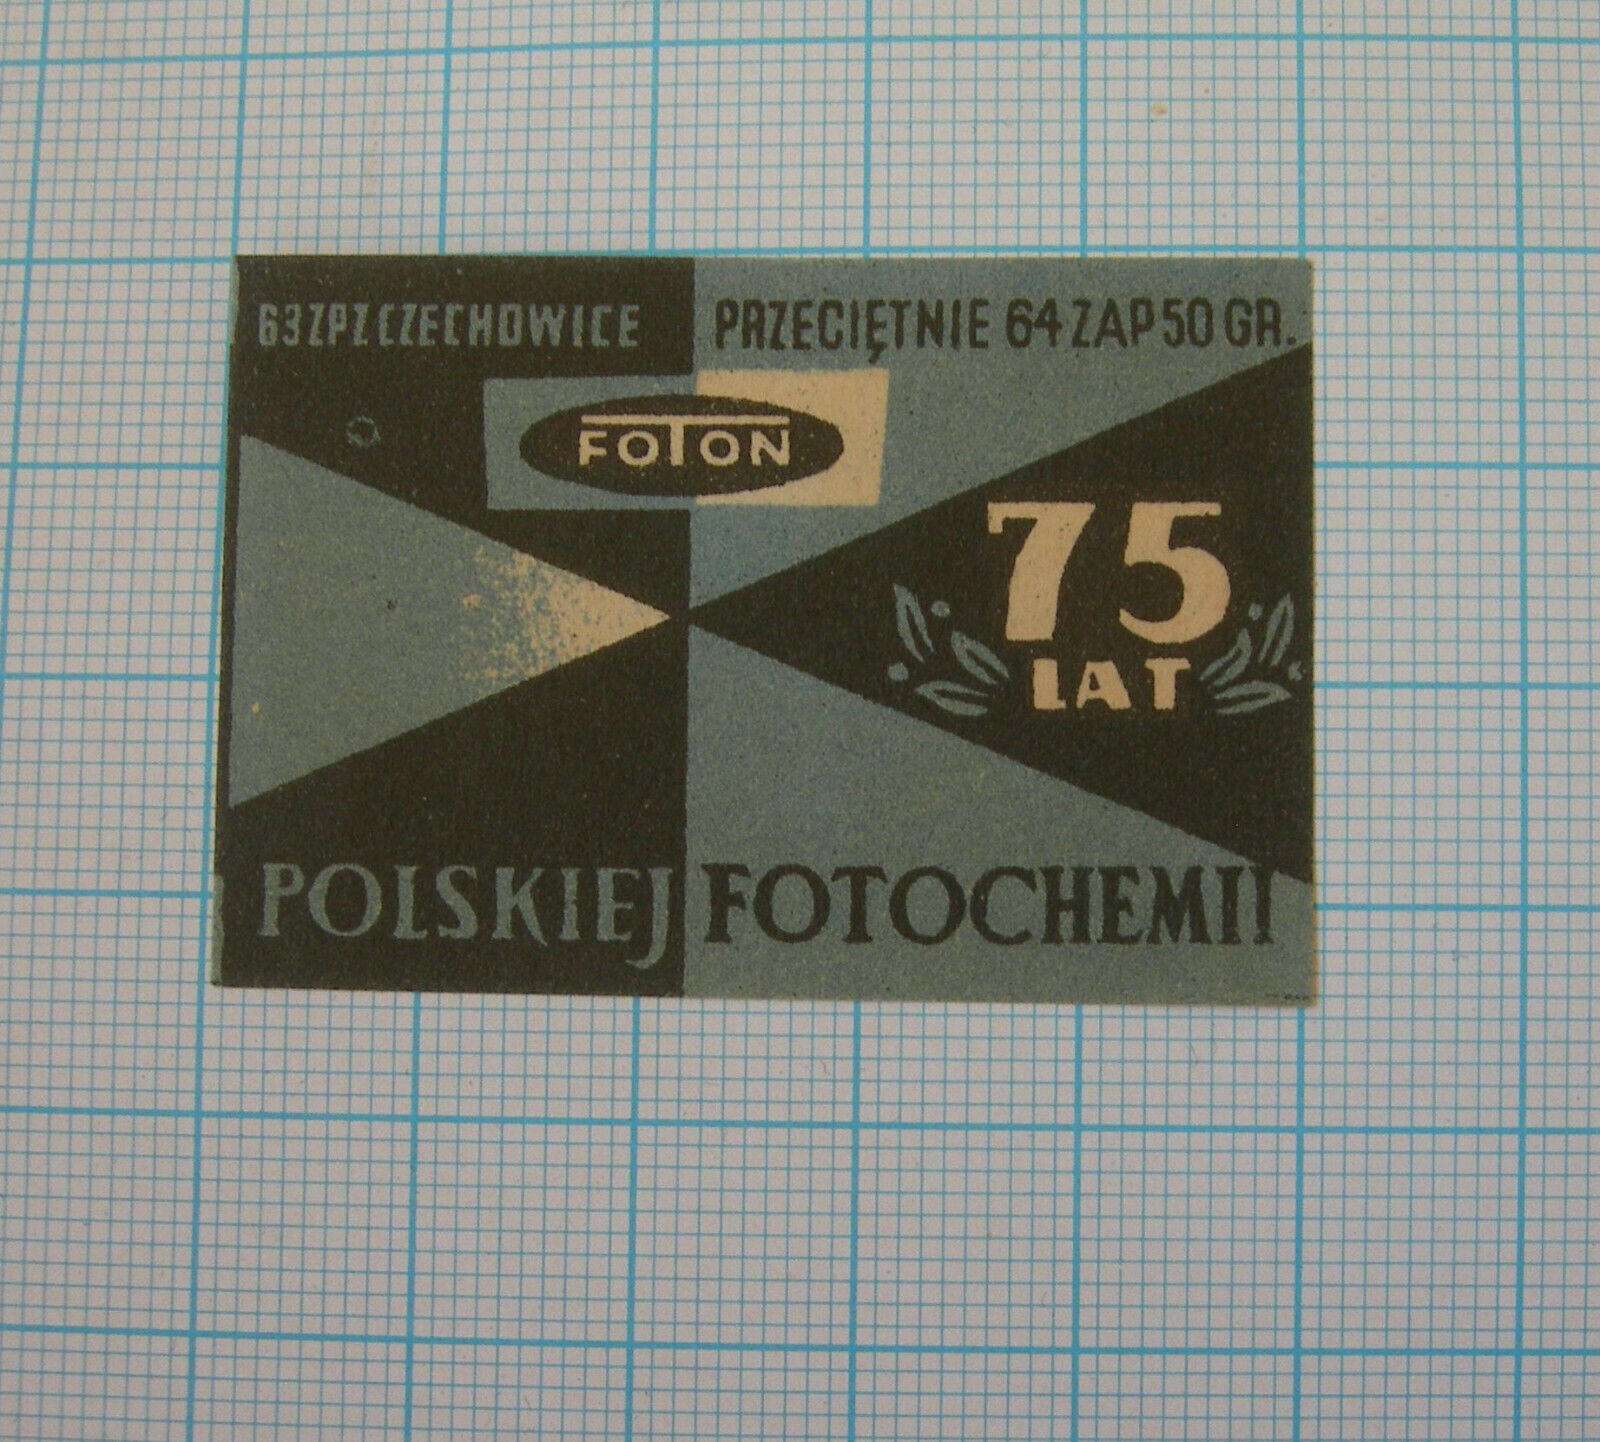 Polish photochemistry - one vintage matchbox labels from Poland - USED RARE